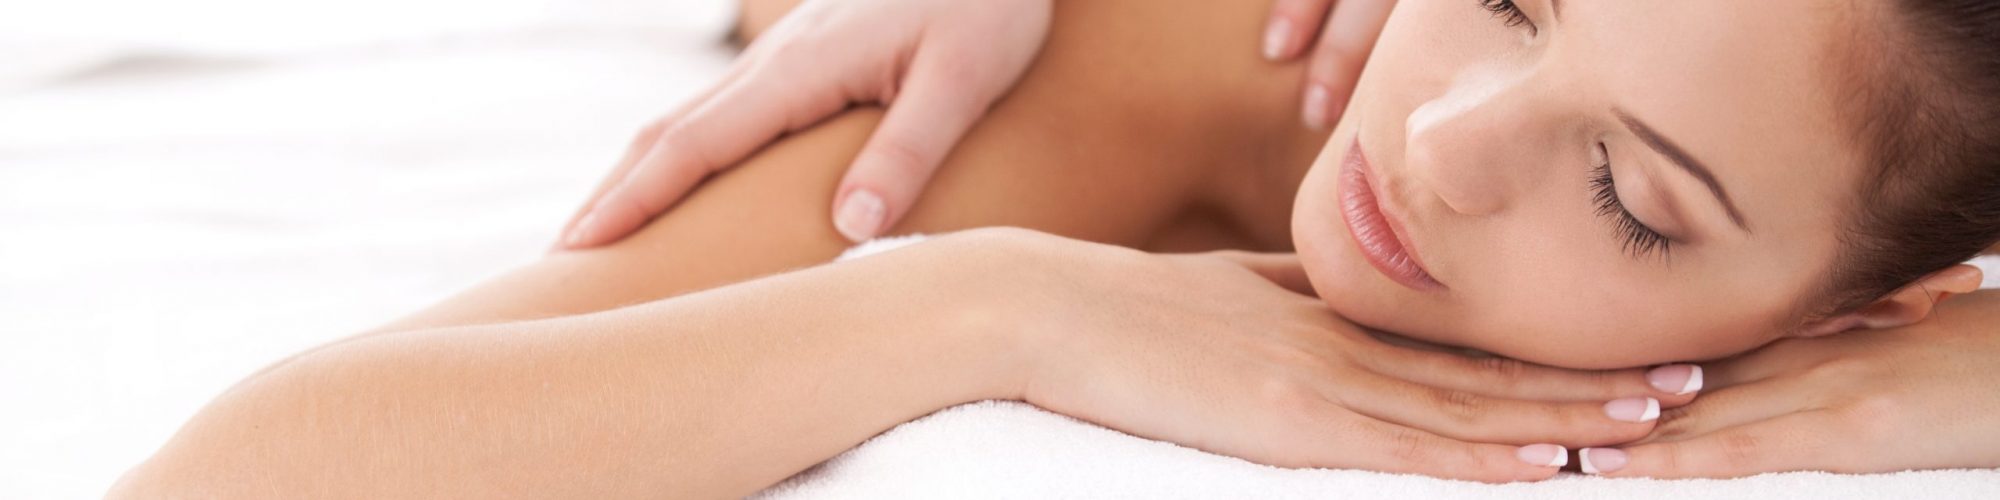 woman getting a body massage